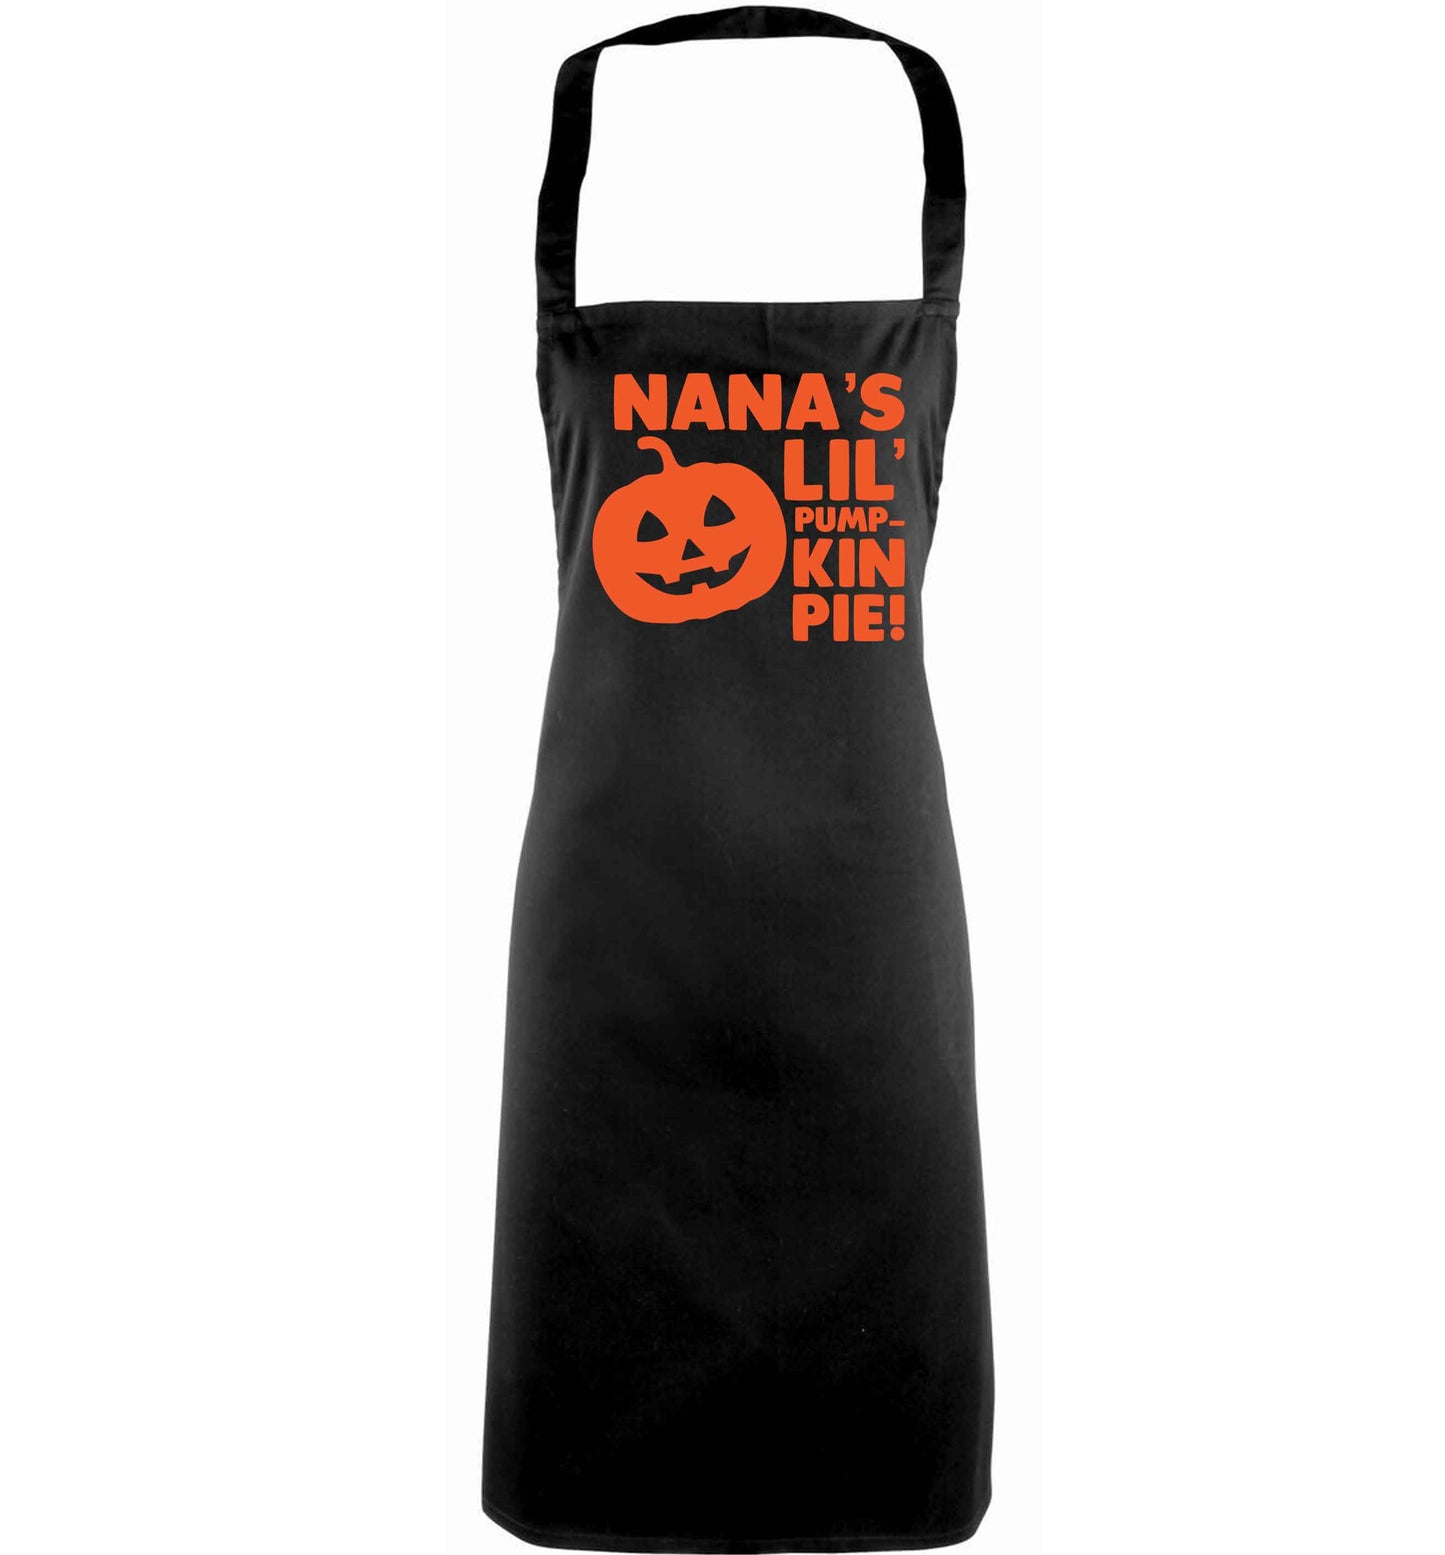 Nana's lil' pumpkin pie adults black apron